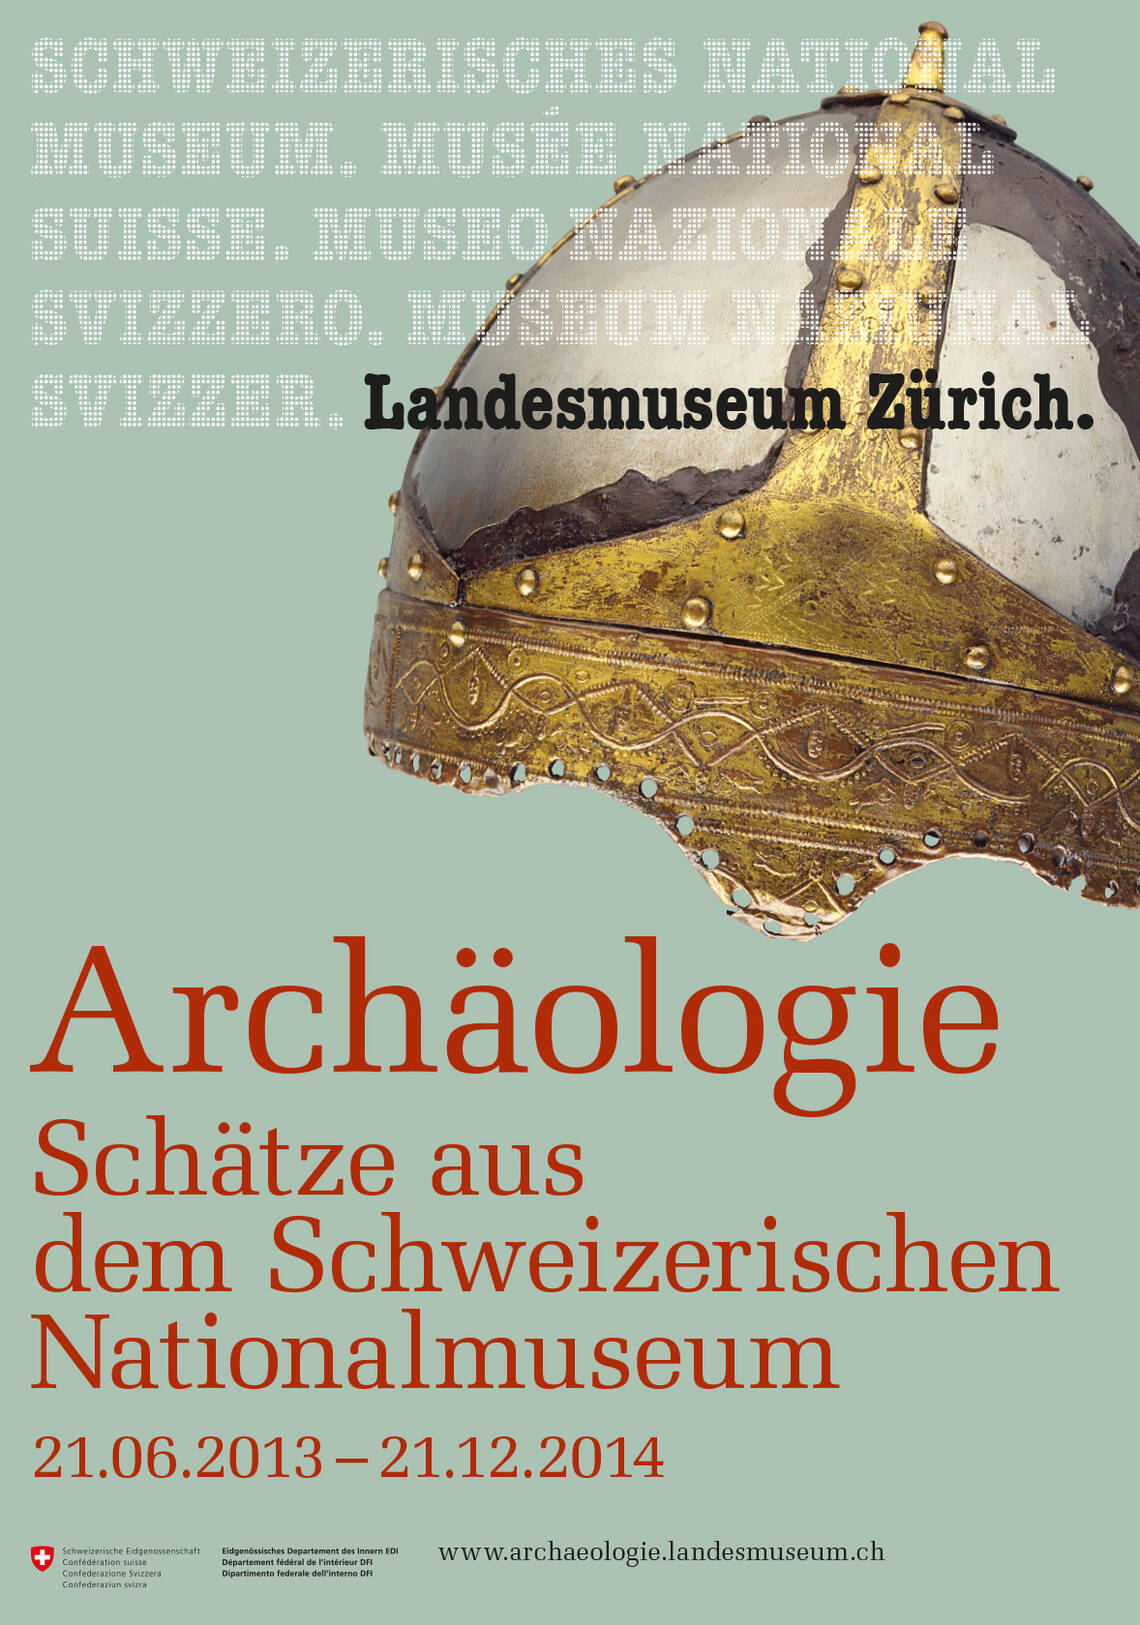 Plakat der Ausstellung "ARCHAEOLOGIE"